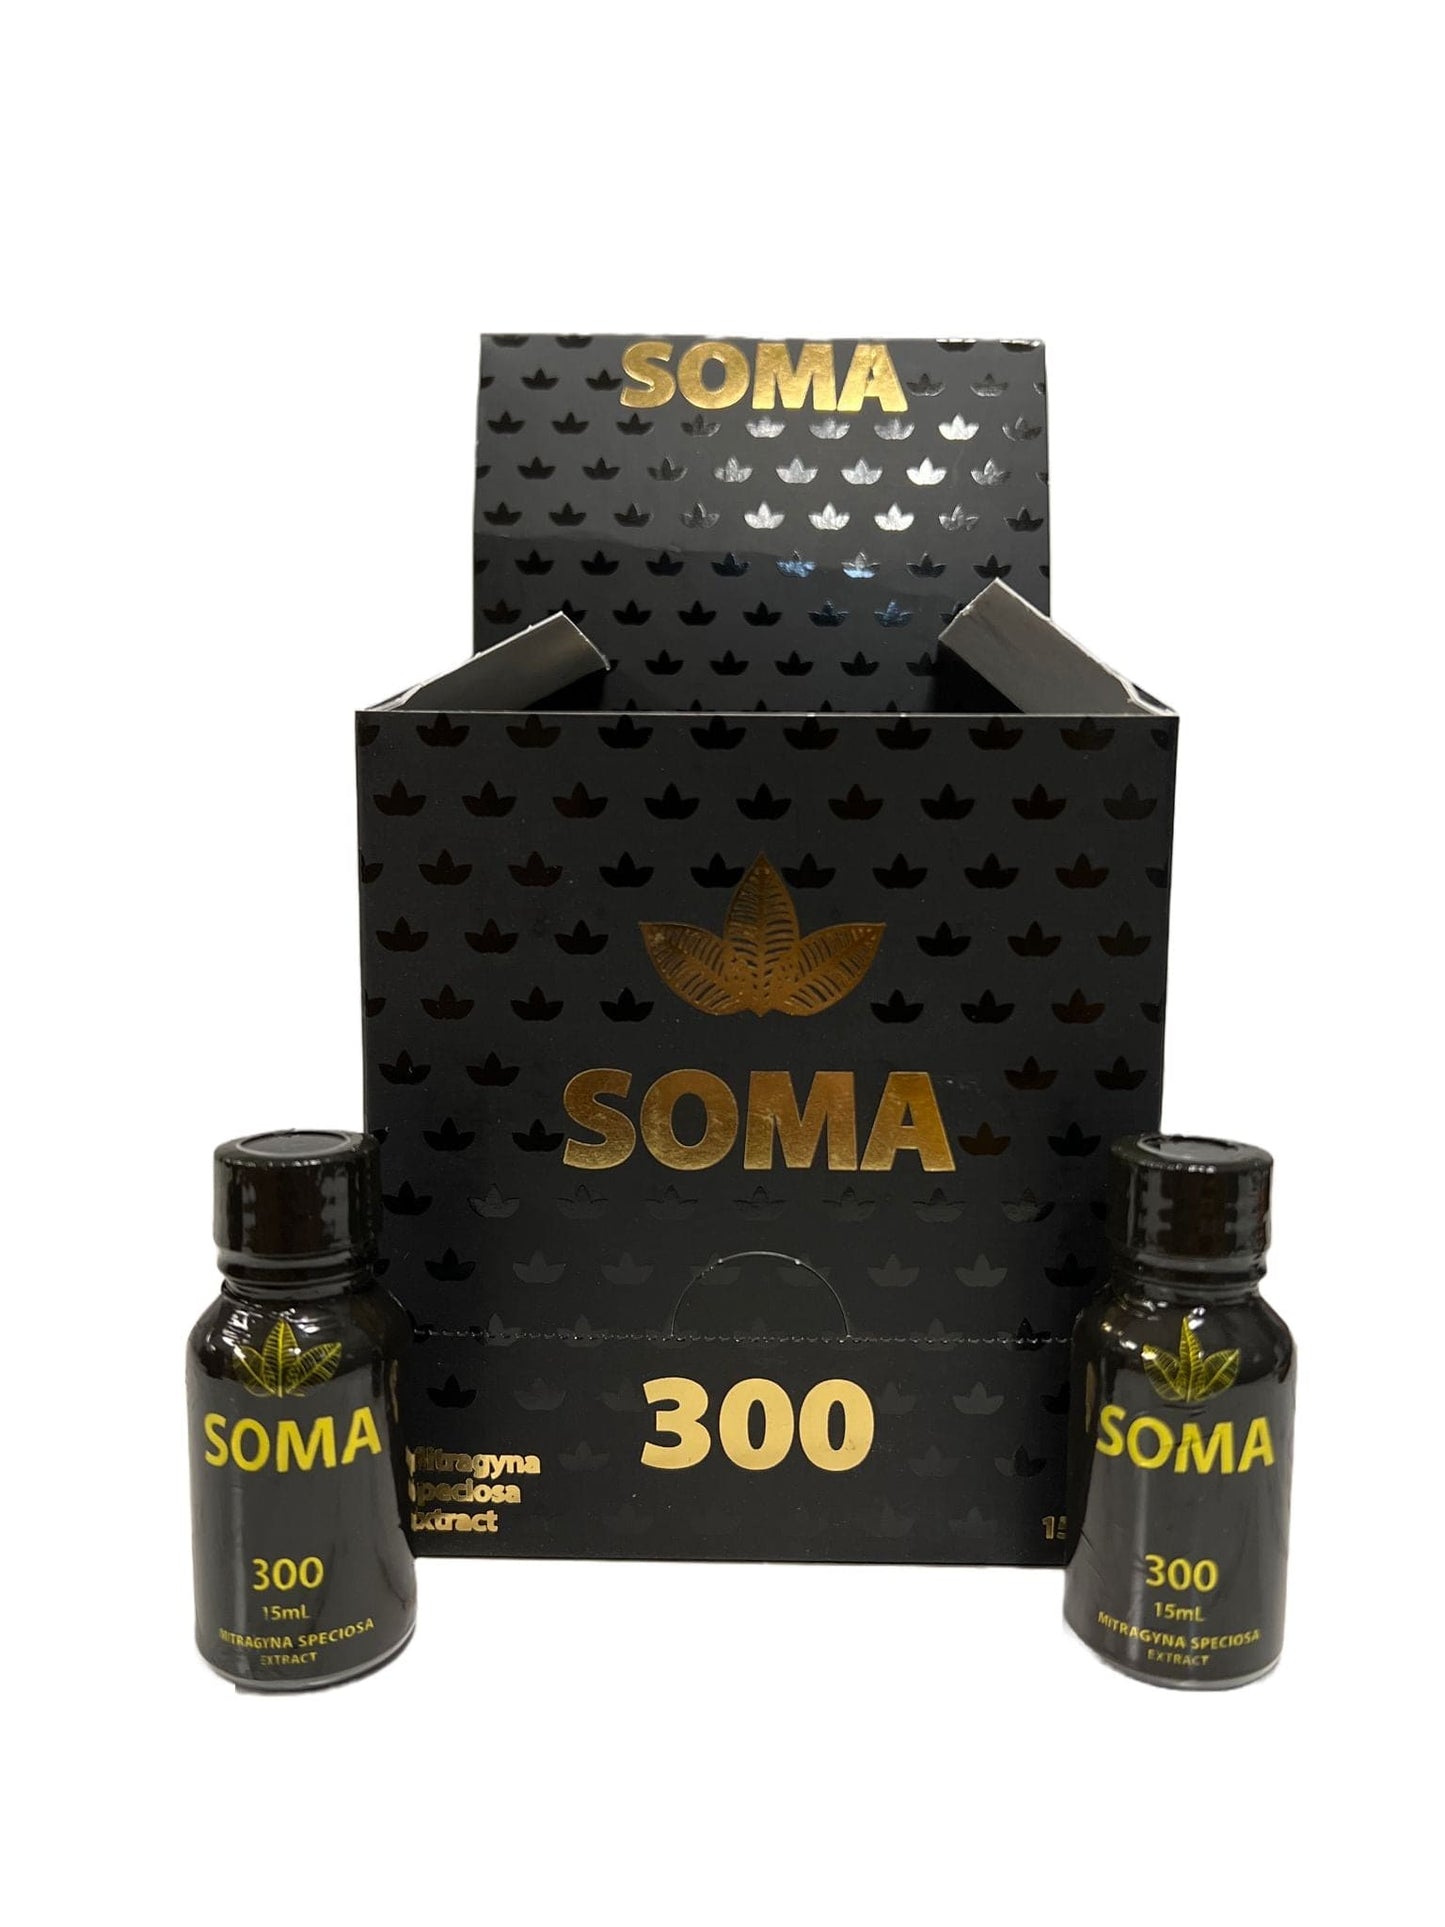 Soma 300 Shots